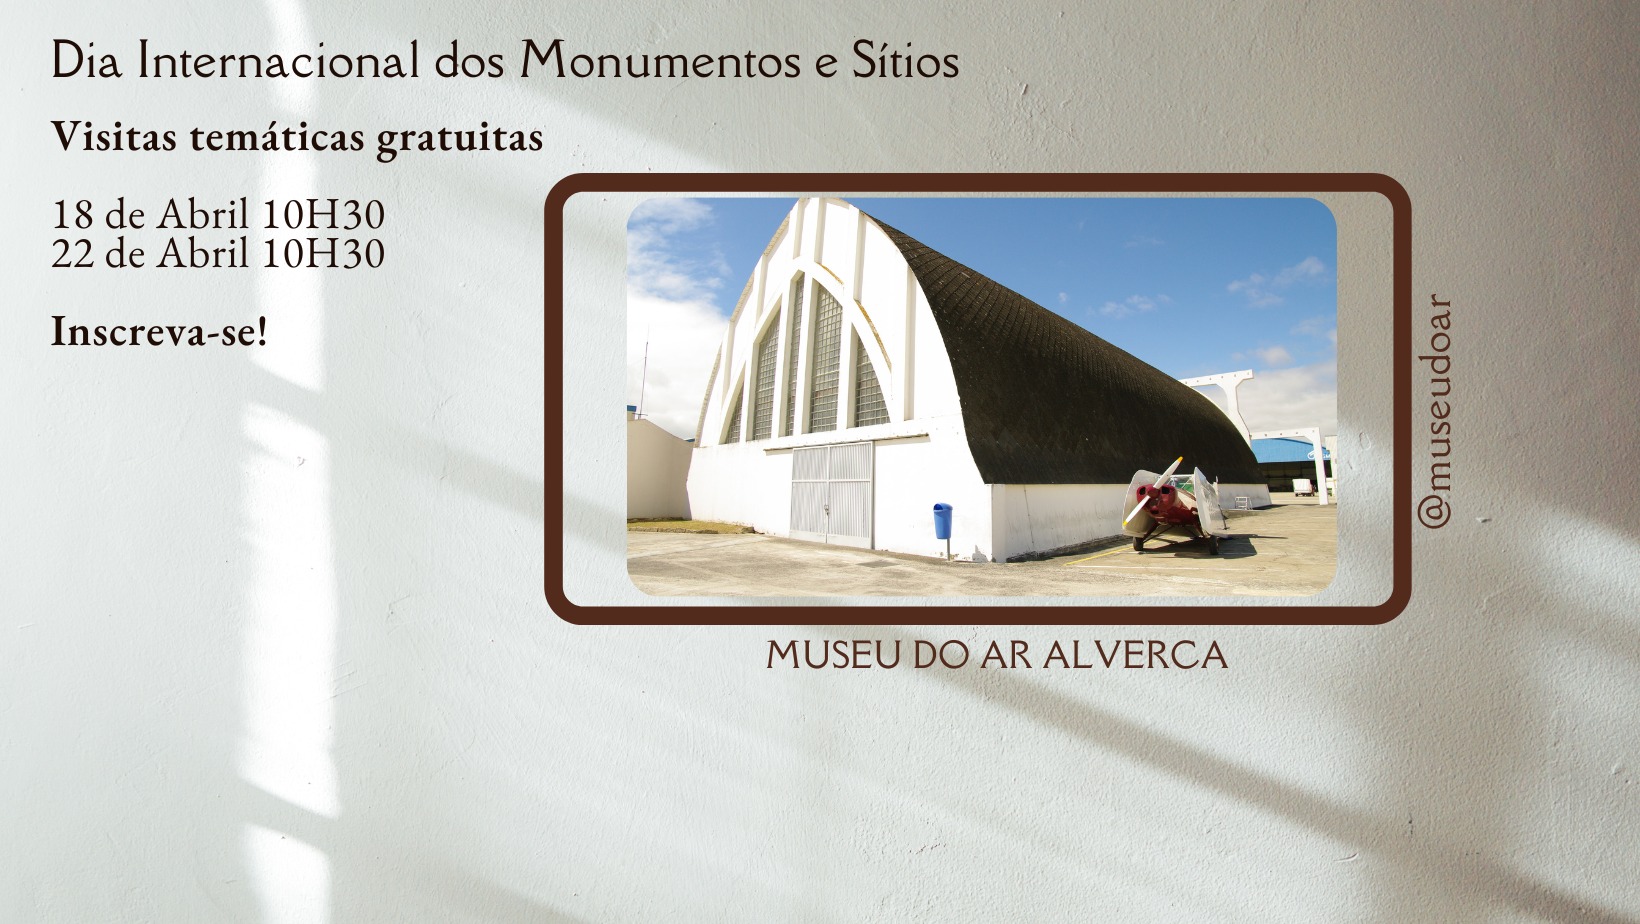 Dia Internacional dos Monumentos e Sítios '23 - Alverca